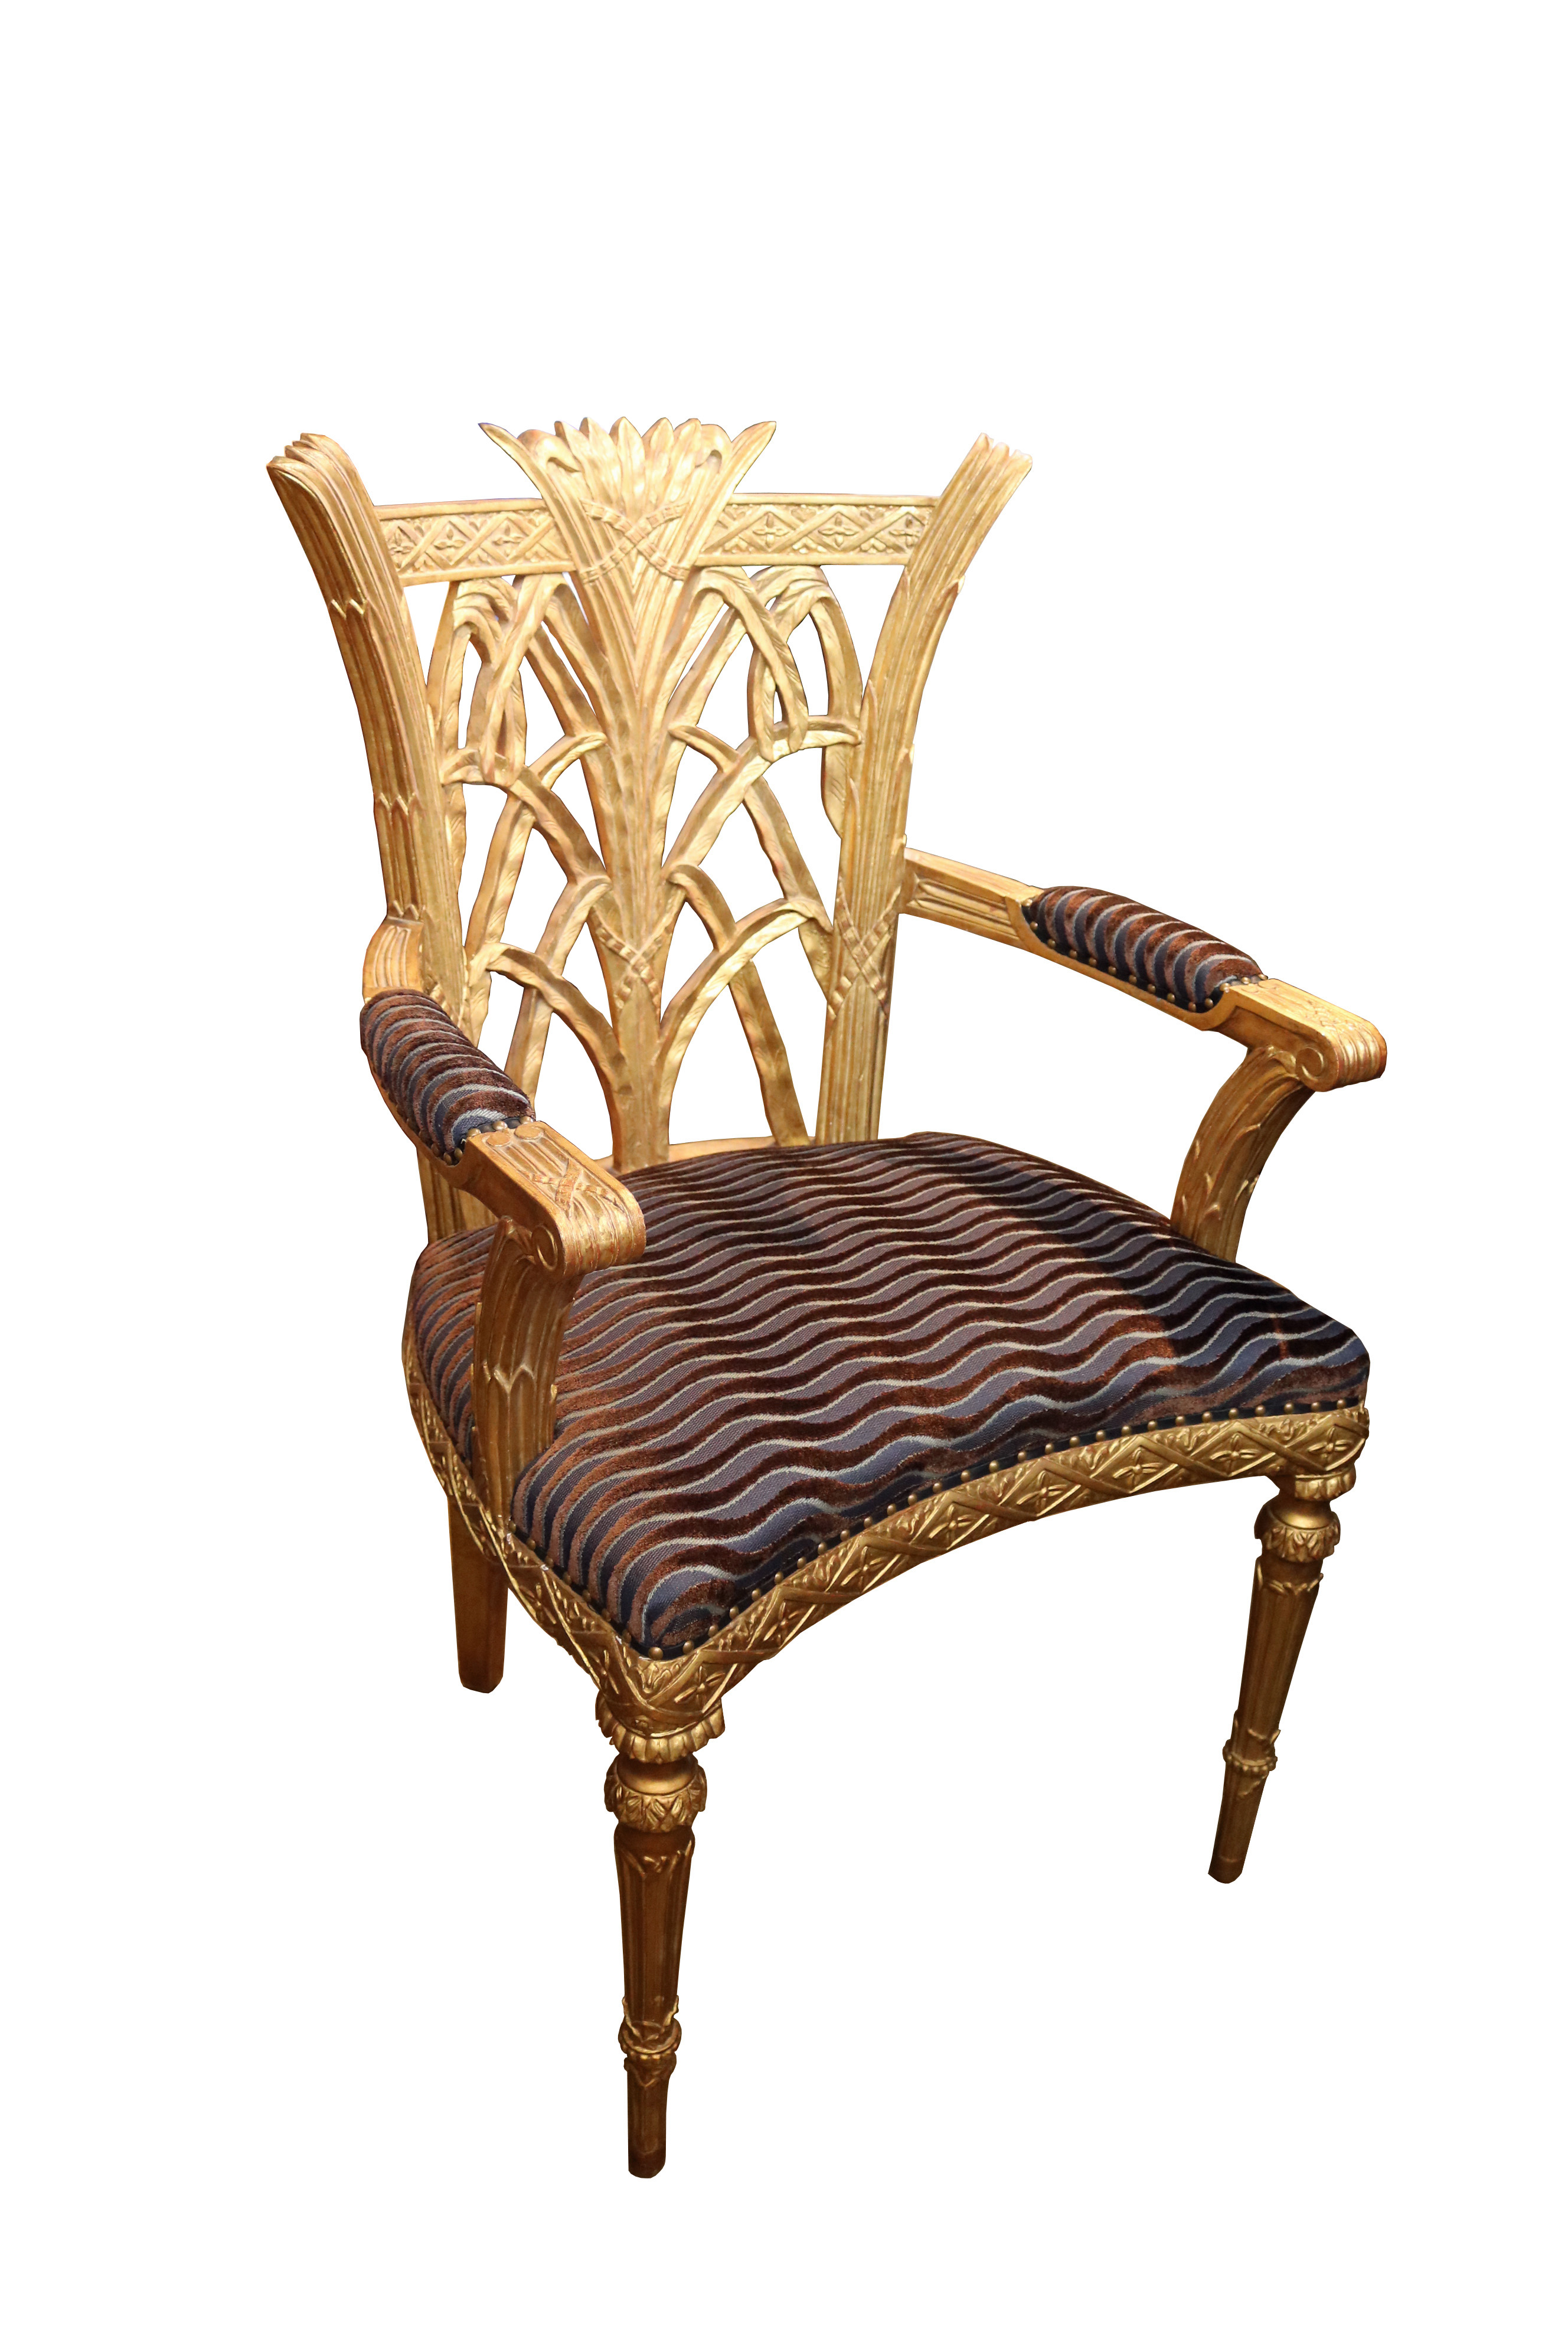 A Set of Ten Gilded Venetian Chairs No.4802